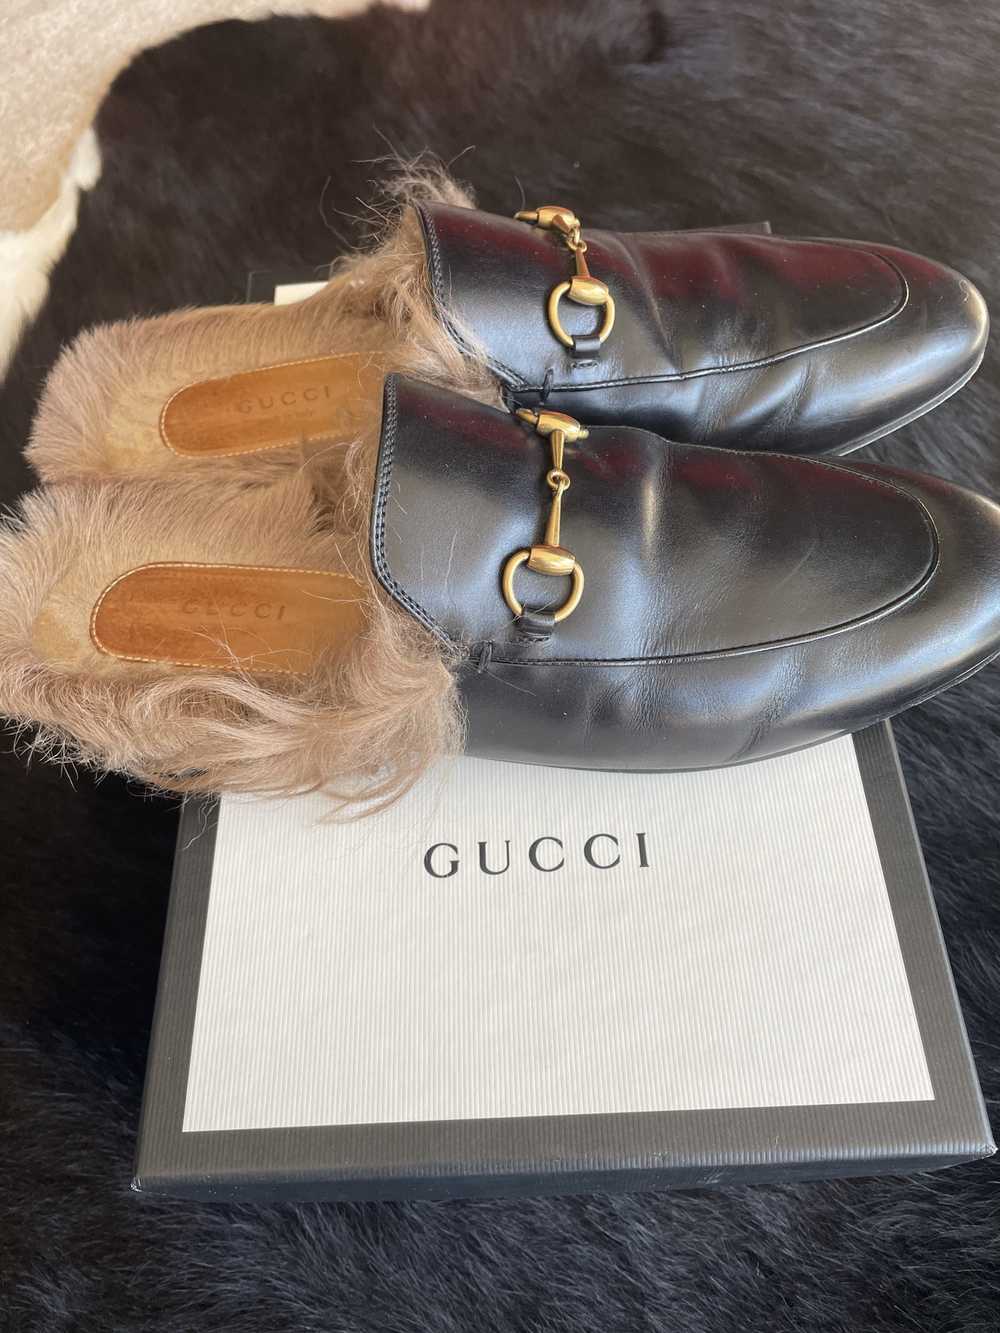 Gucci GUCCI 2015 Re-Edition women's Princetown - image 9